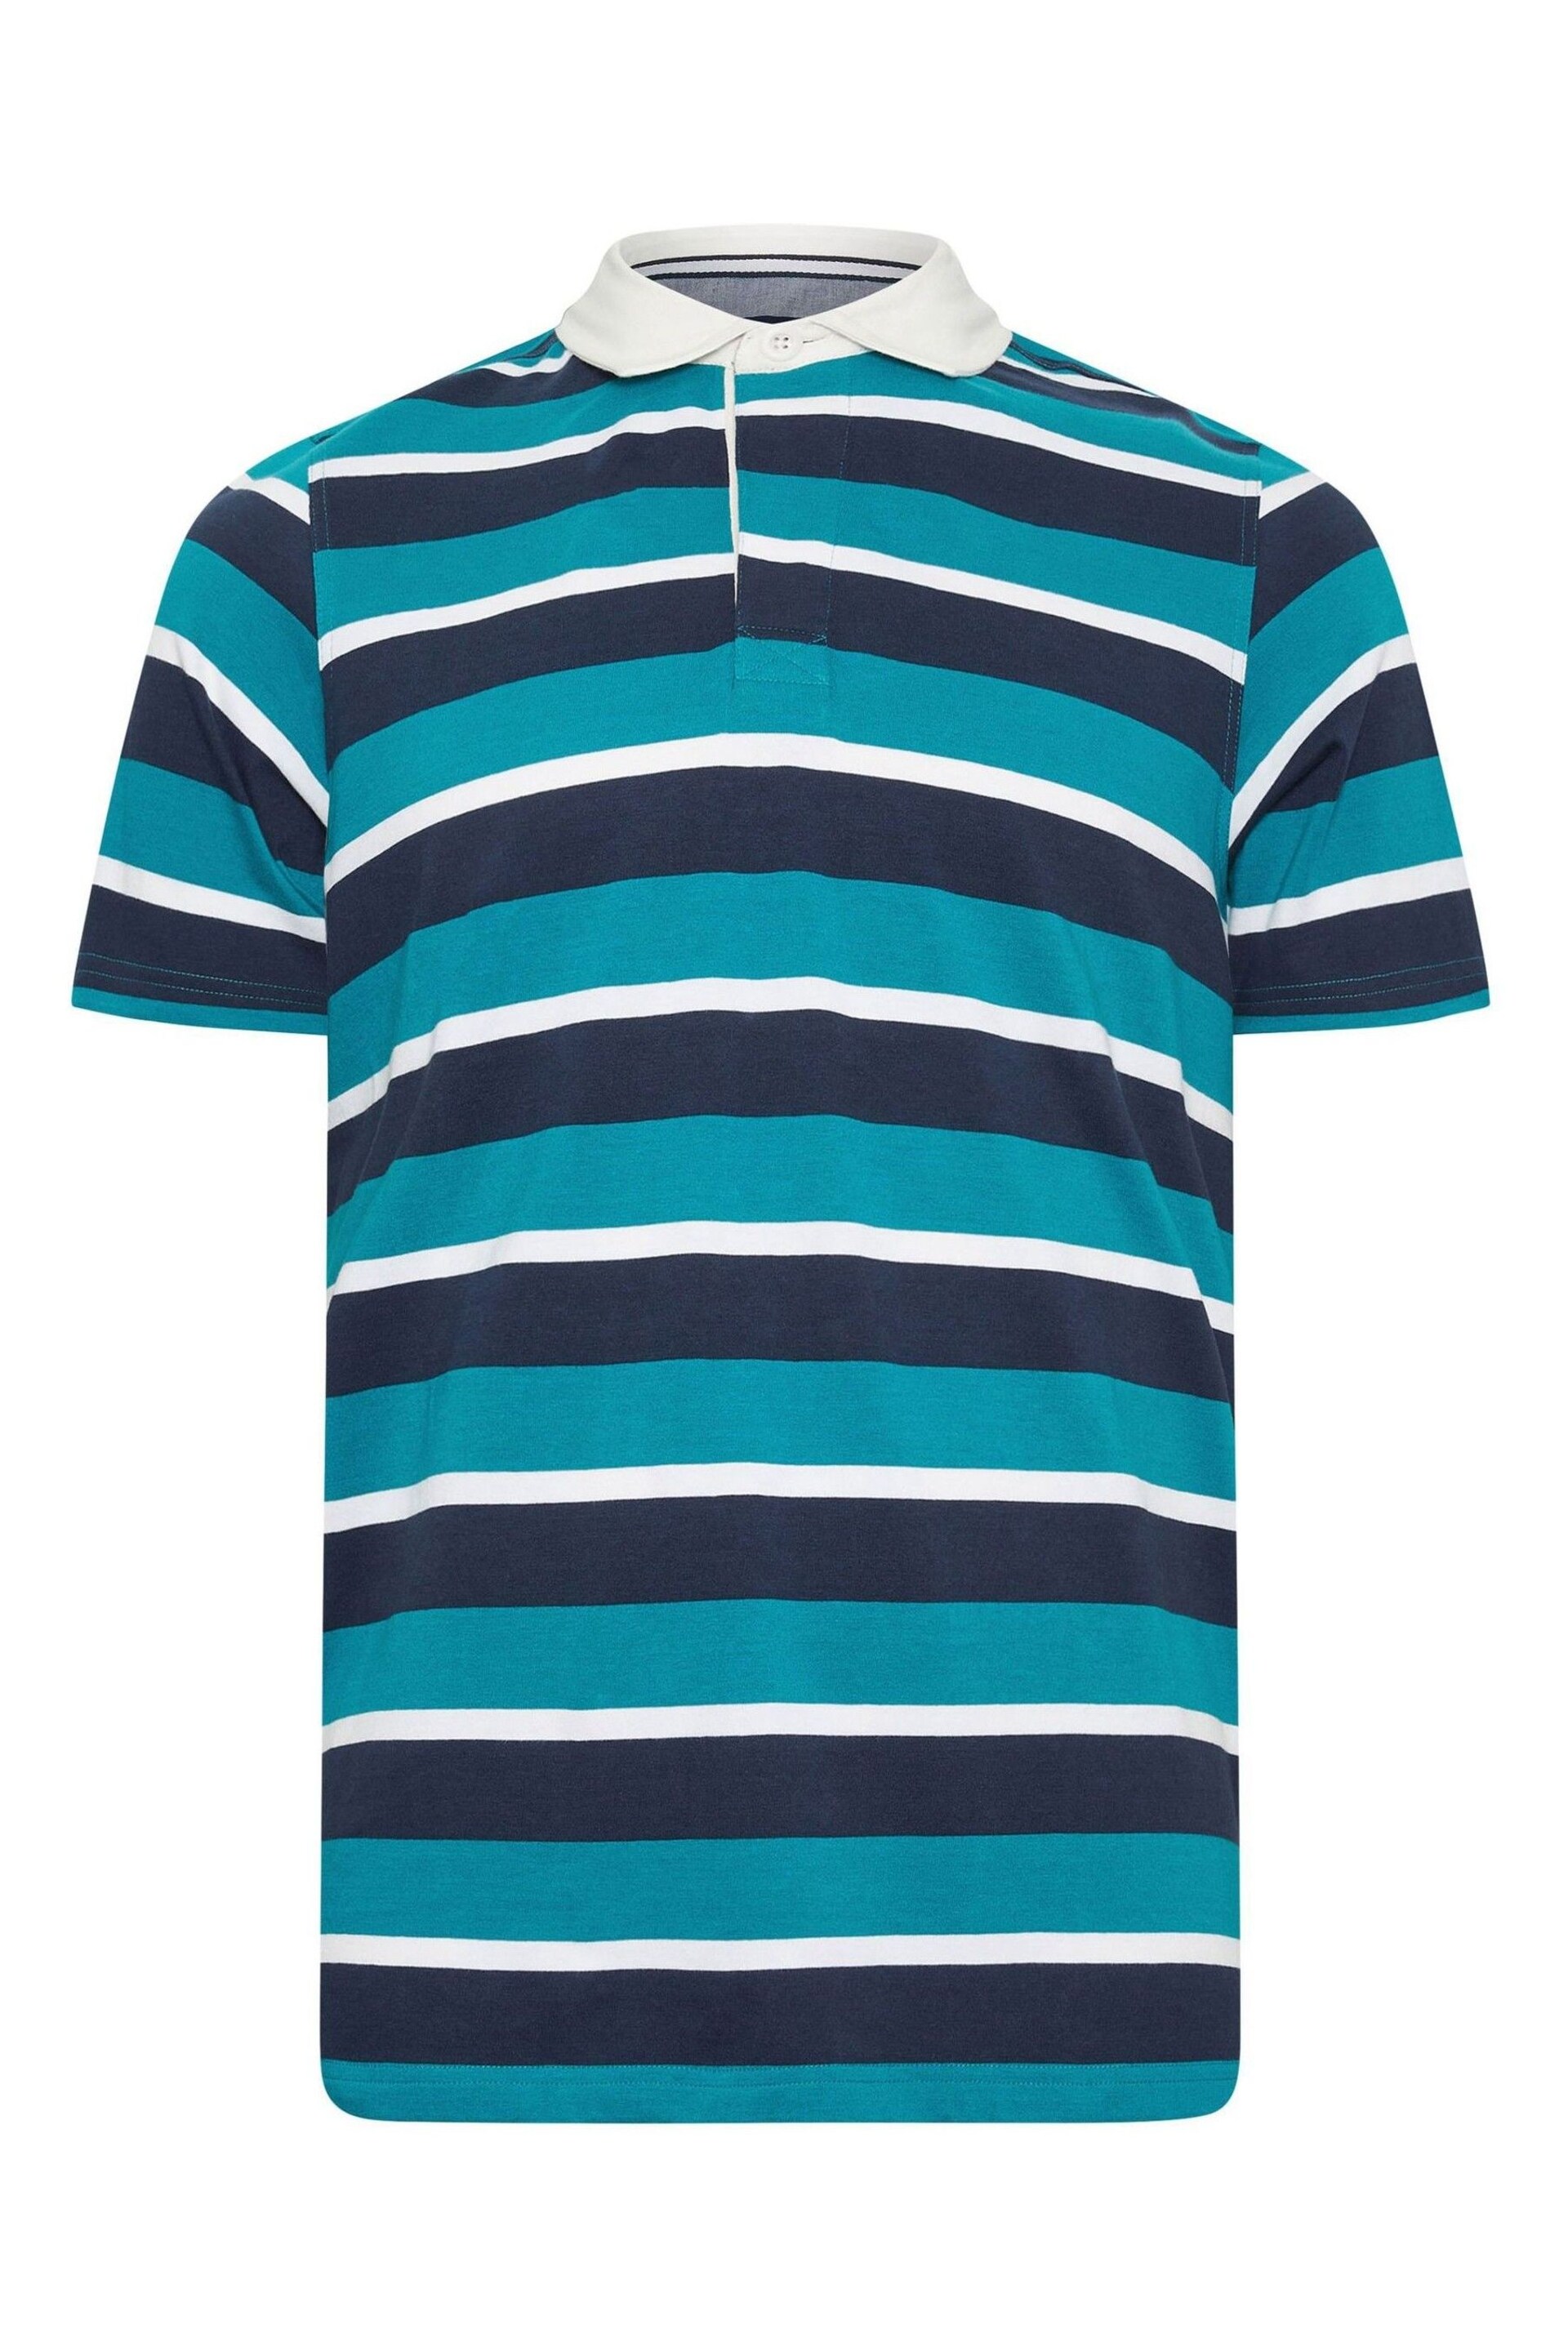 BadRhino Big & Tall Blue Stripe Rugby Polo Shirt - Image 2 of 3